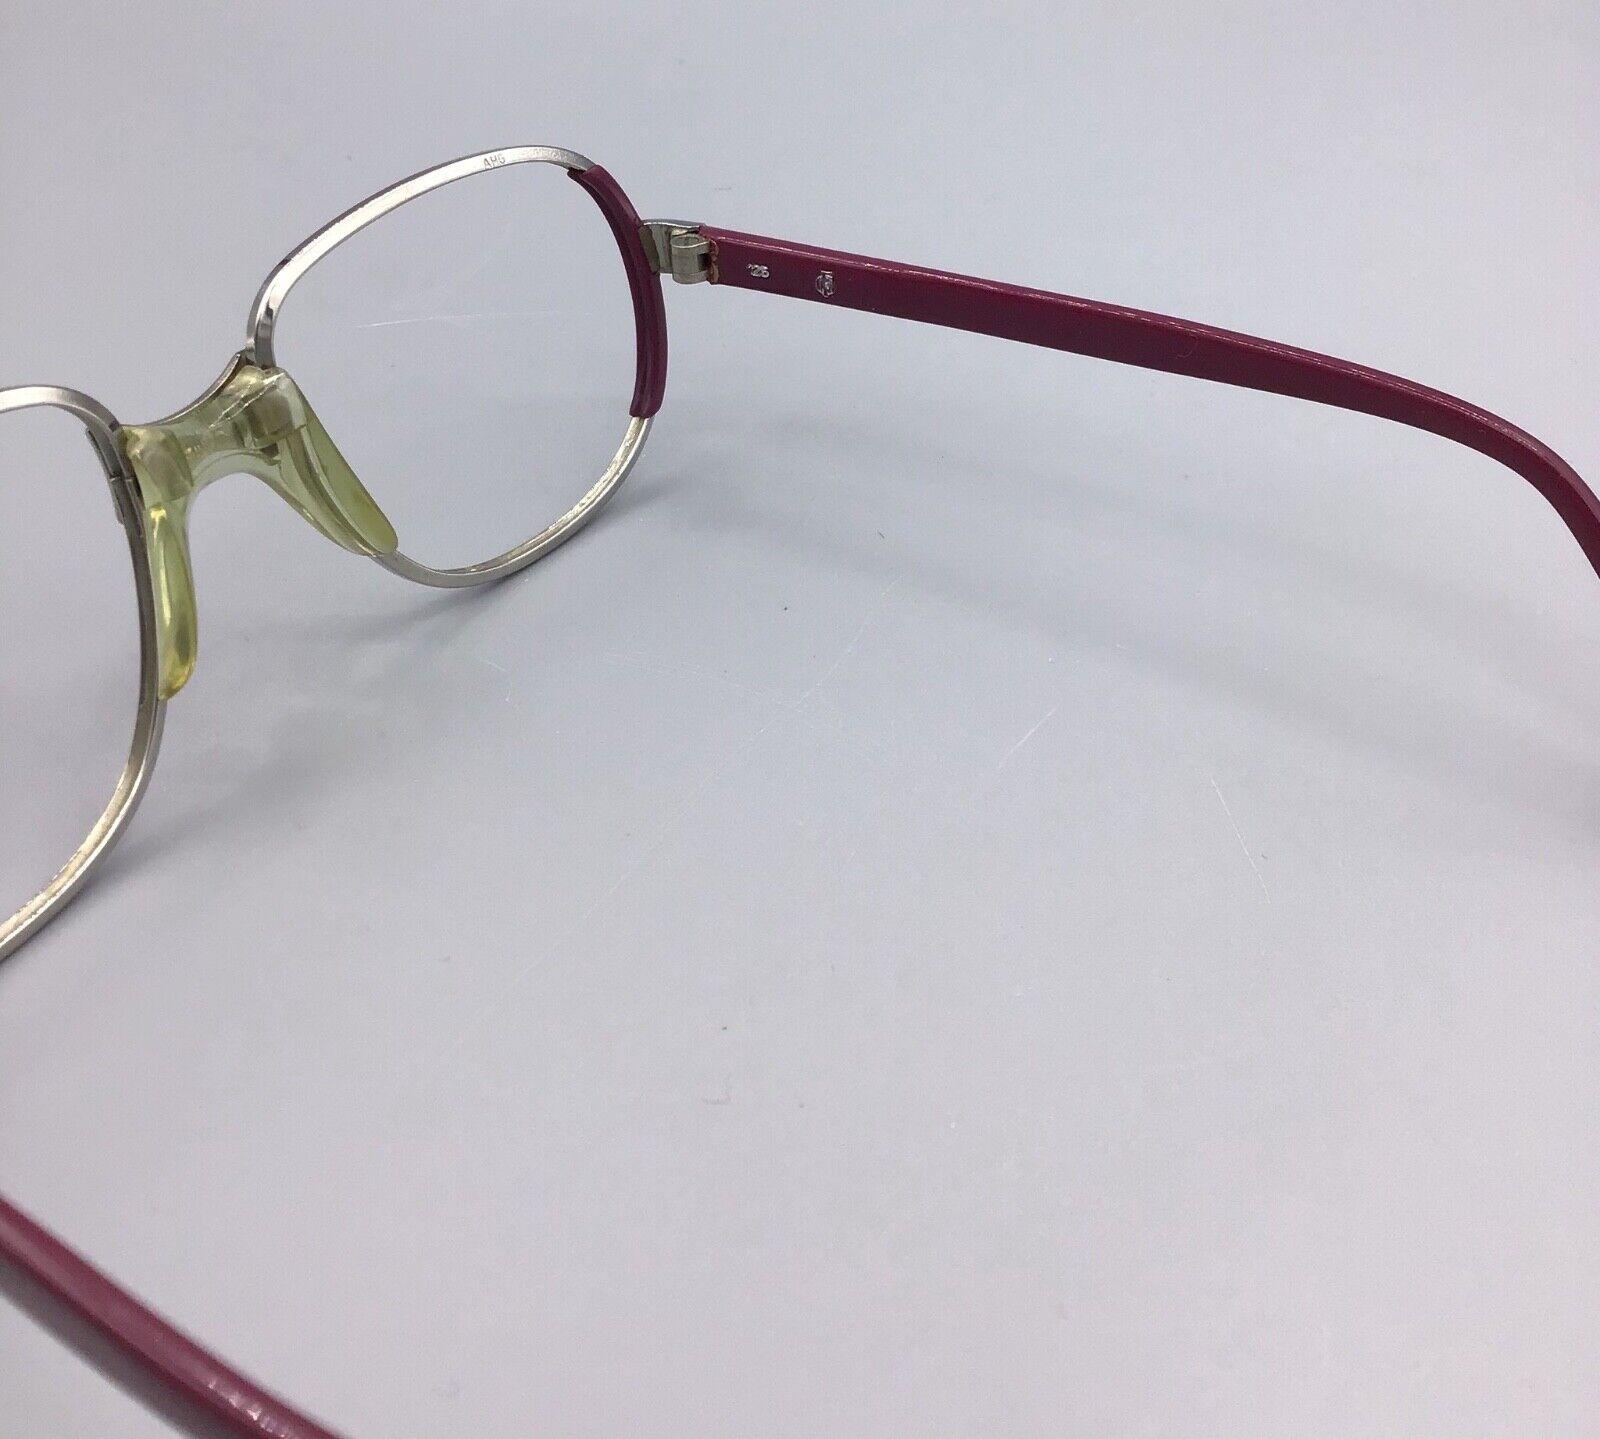 Metzler occhiale vintage Eyewear frame brillen lunettes Germany model 510